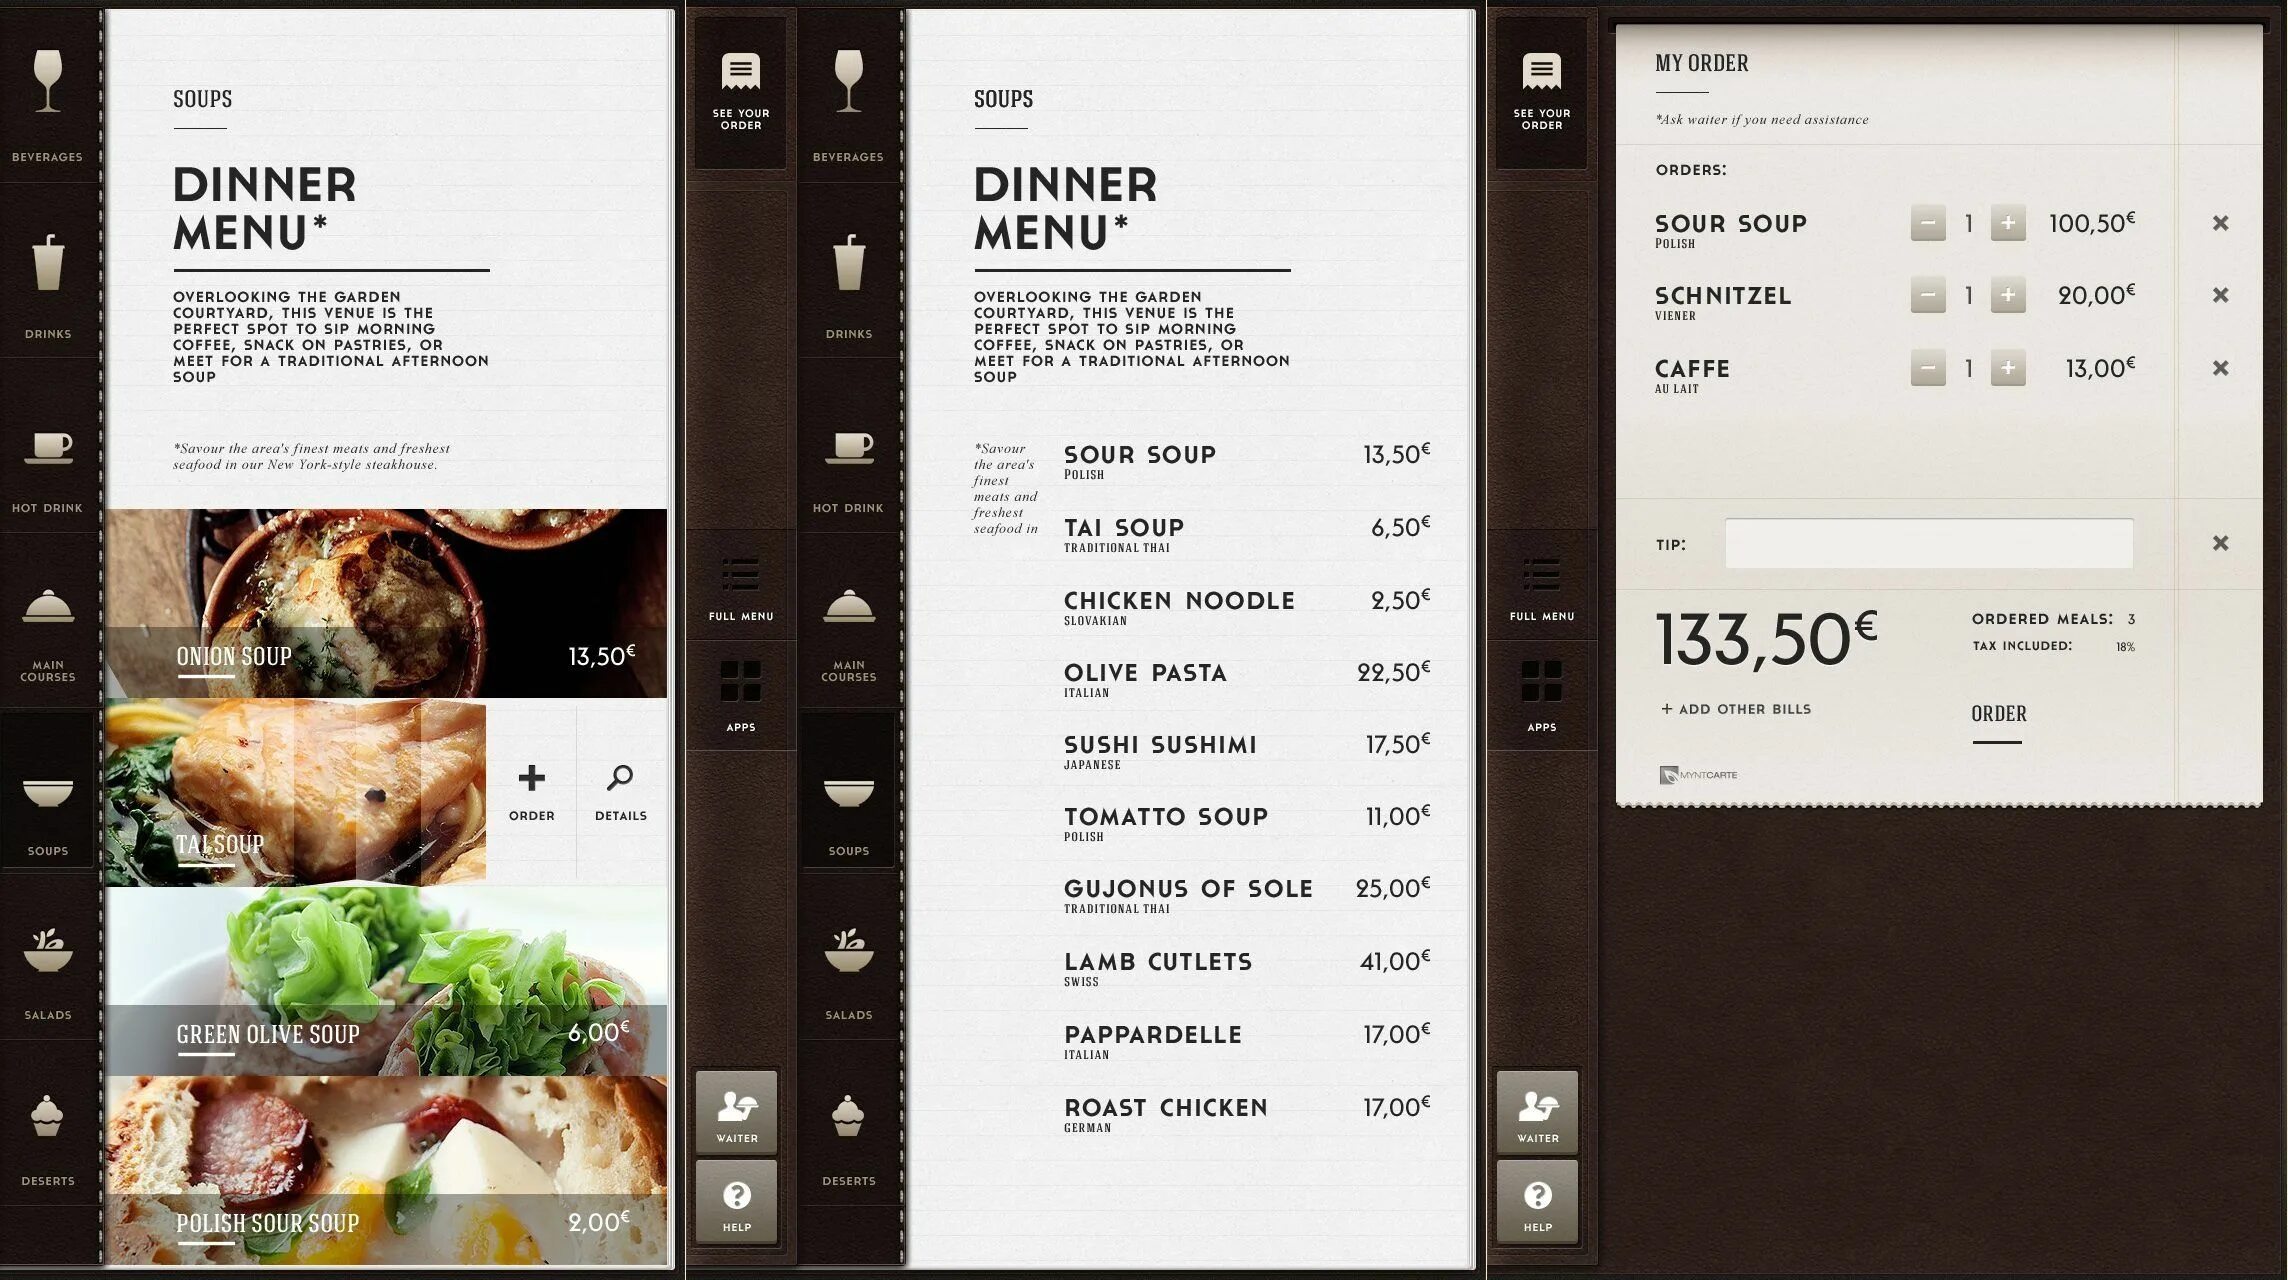 Меню снизу. Экранное меню. Меню на экране. Меню ресторана UI дизайн. Дизайн меню на экран.